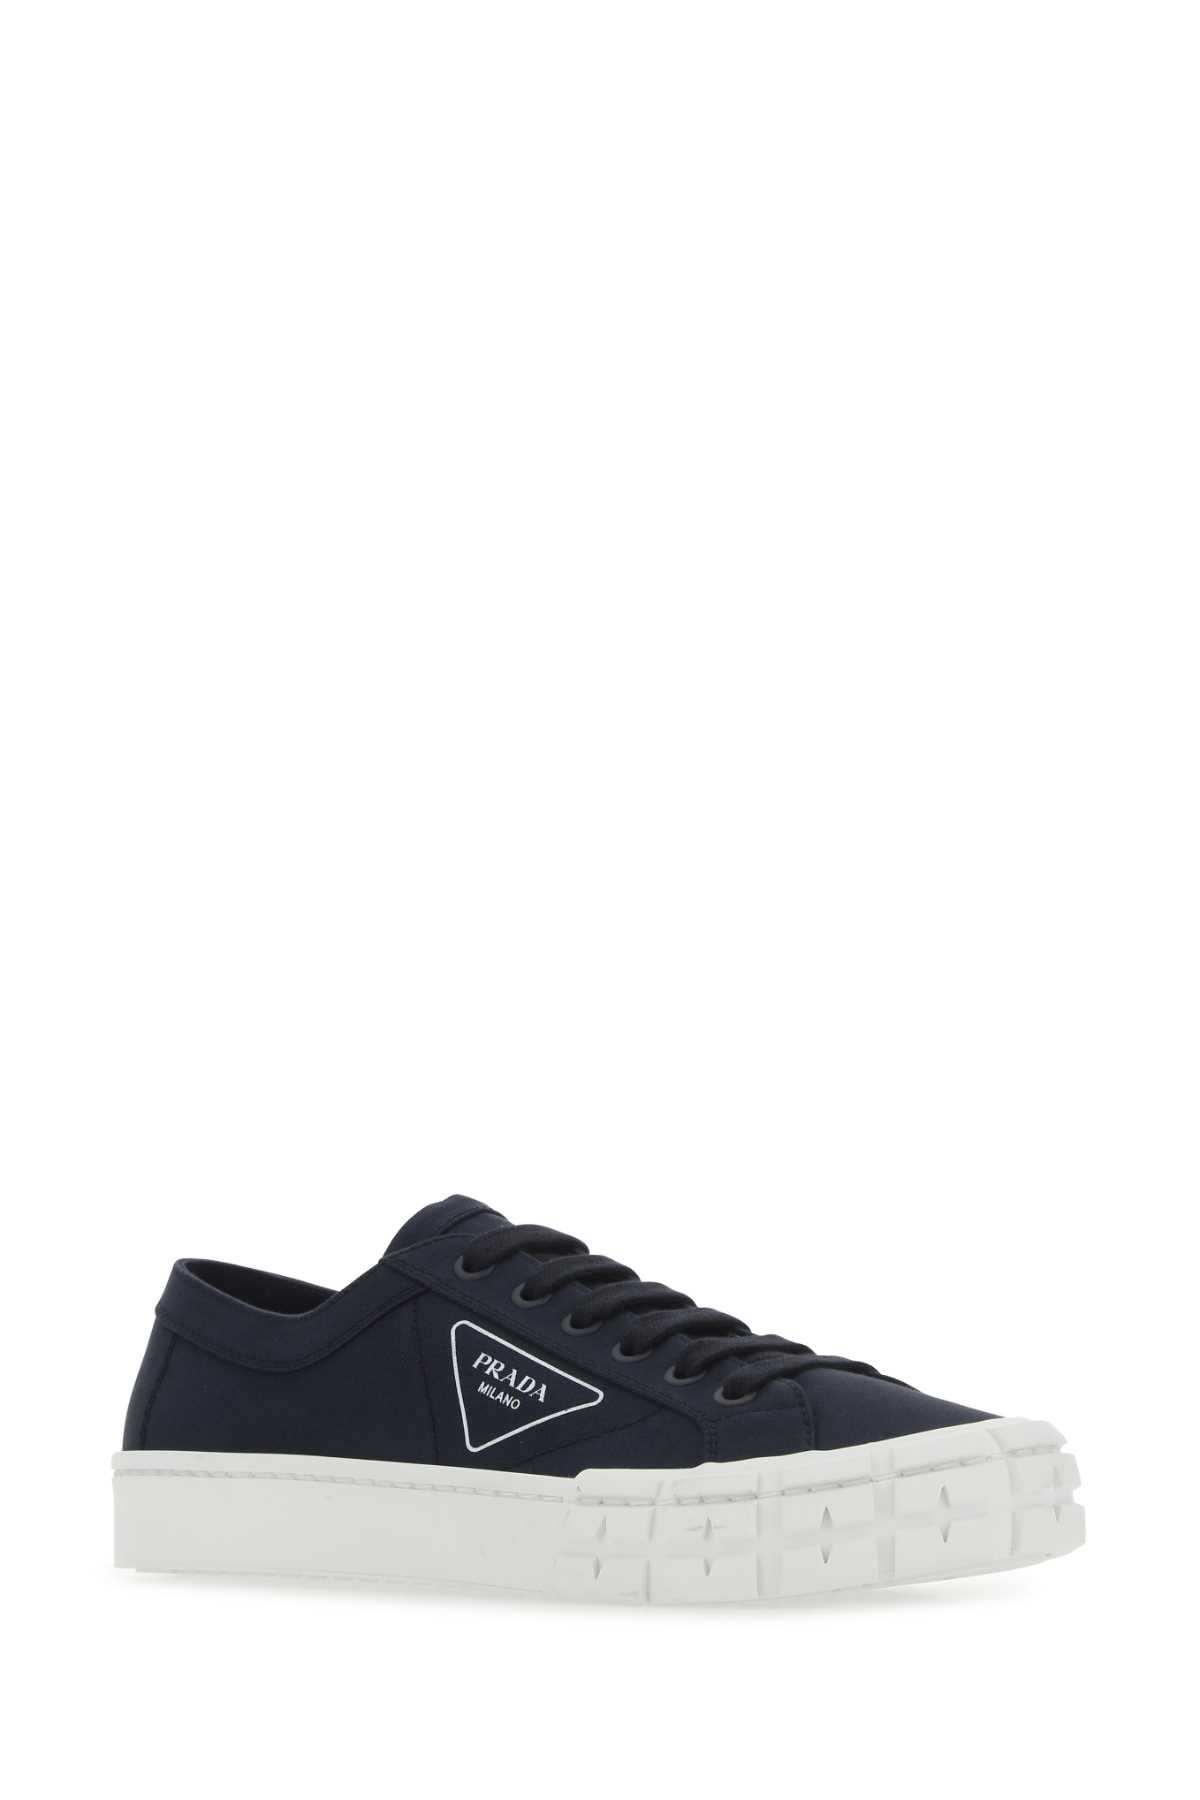 Shop Prada Navy Blue Canvas Sneakers In F0008